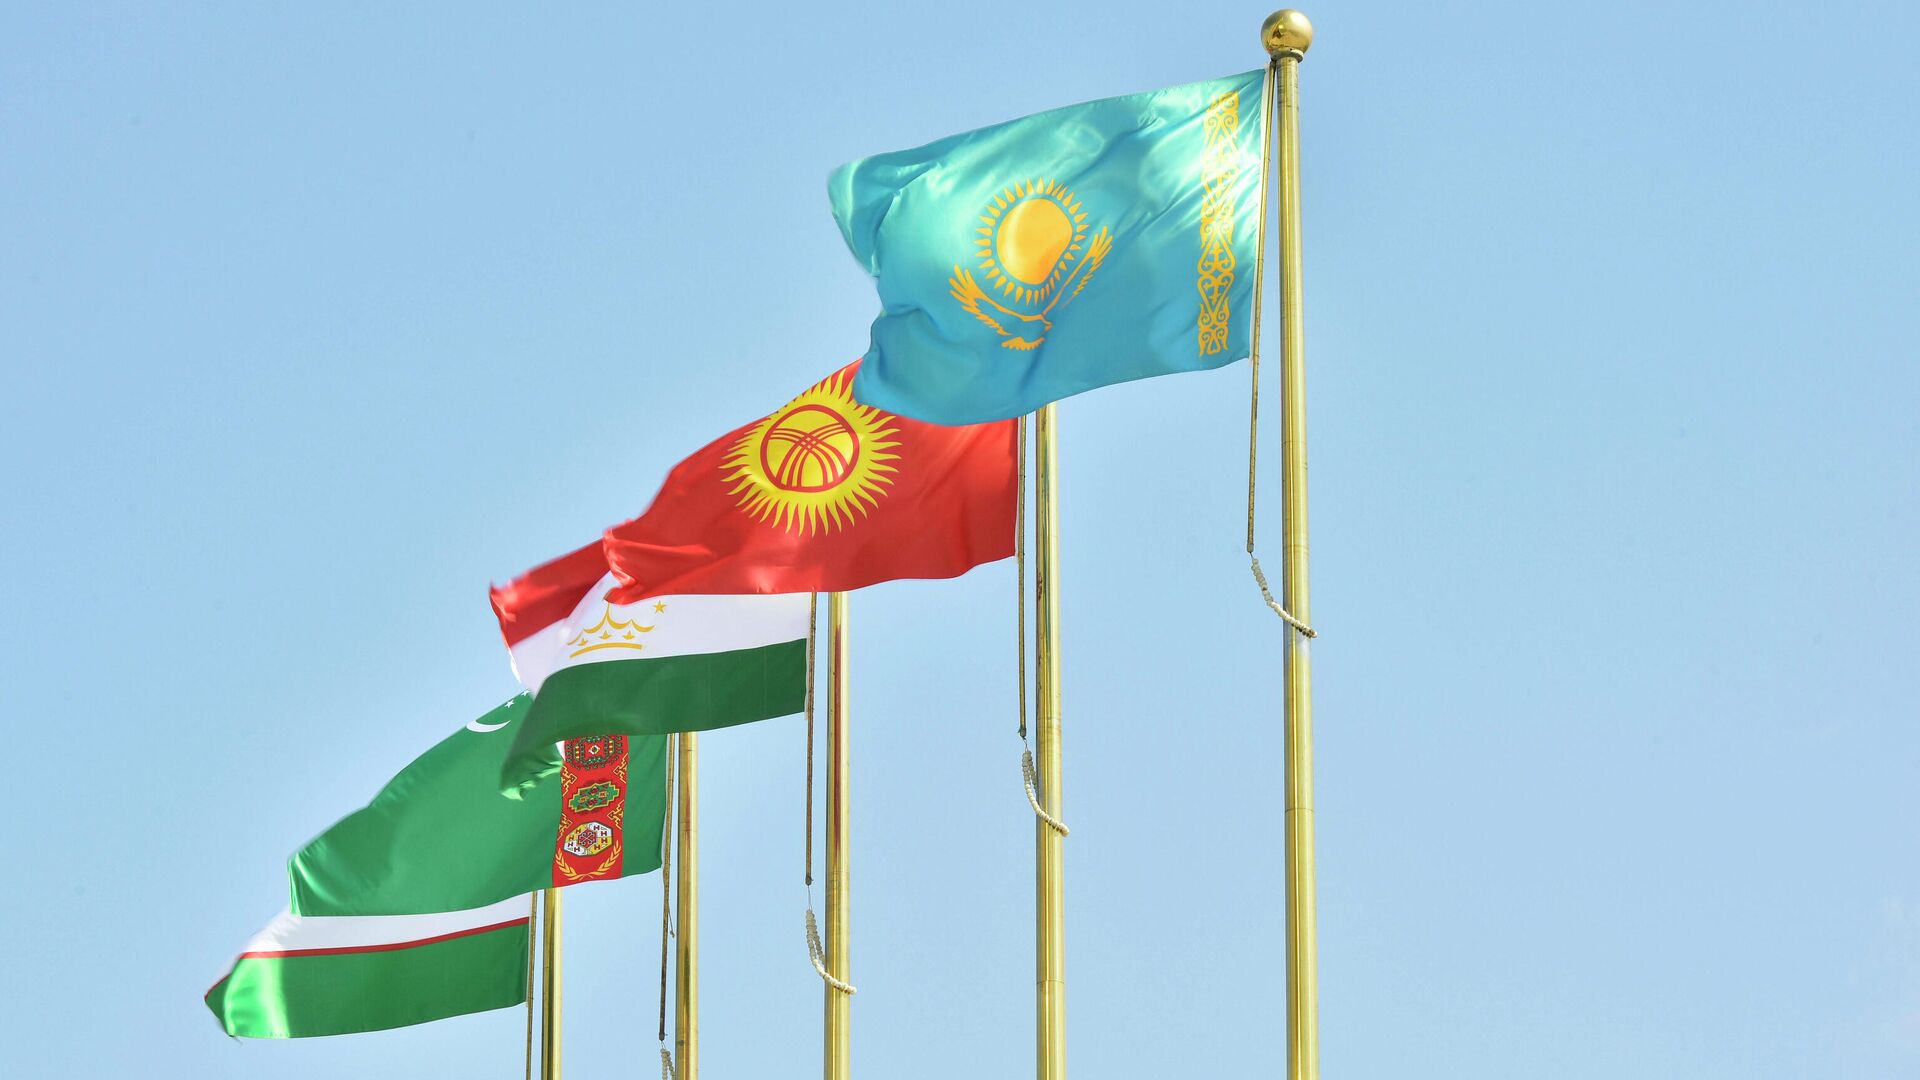 Узбекистан нарастил товарооборот со странами ЦА до $3 млрд